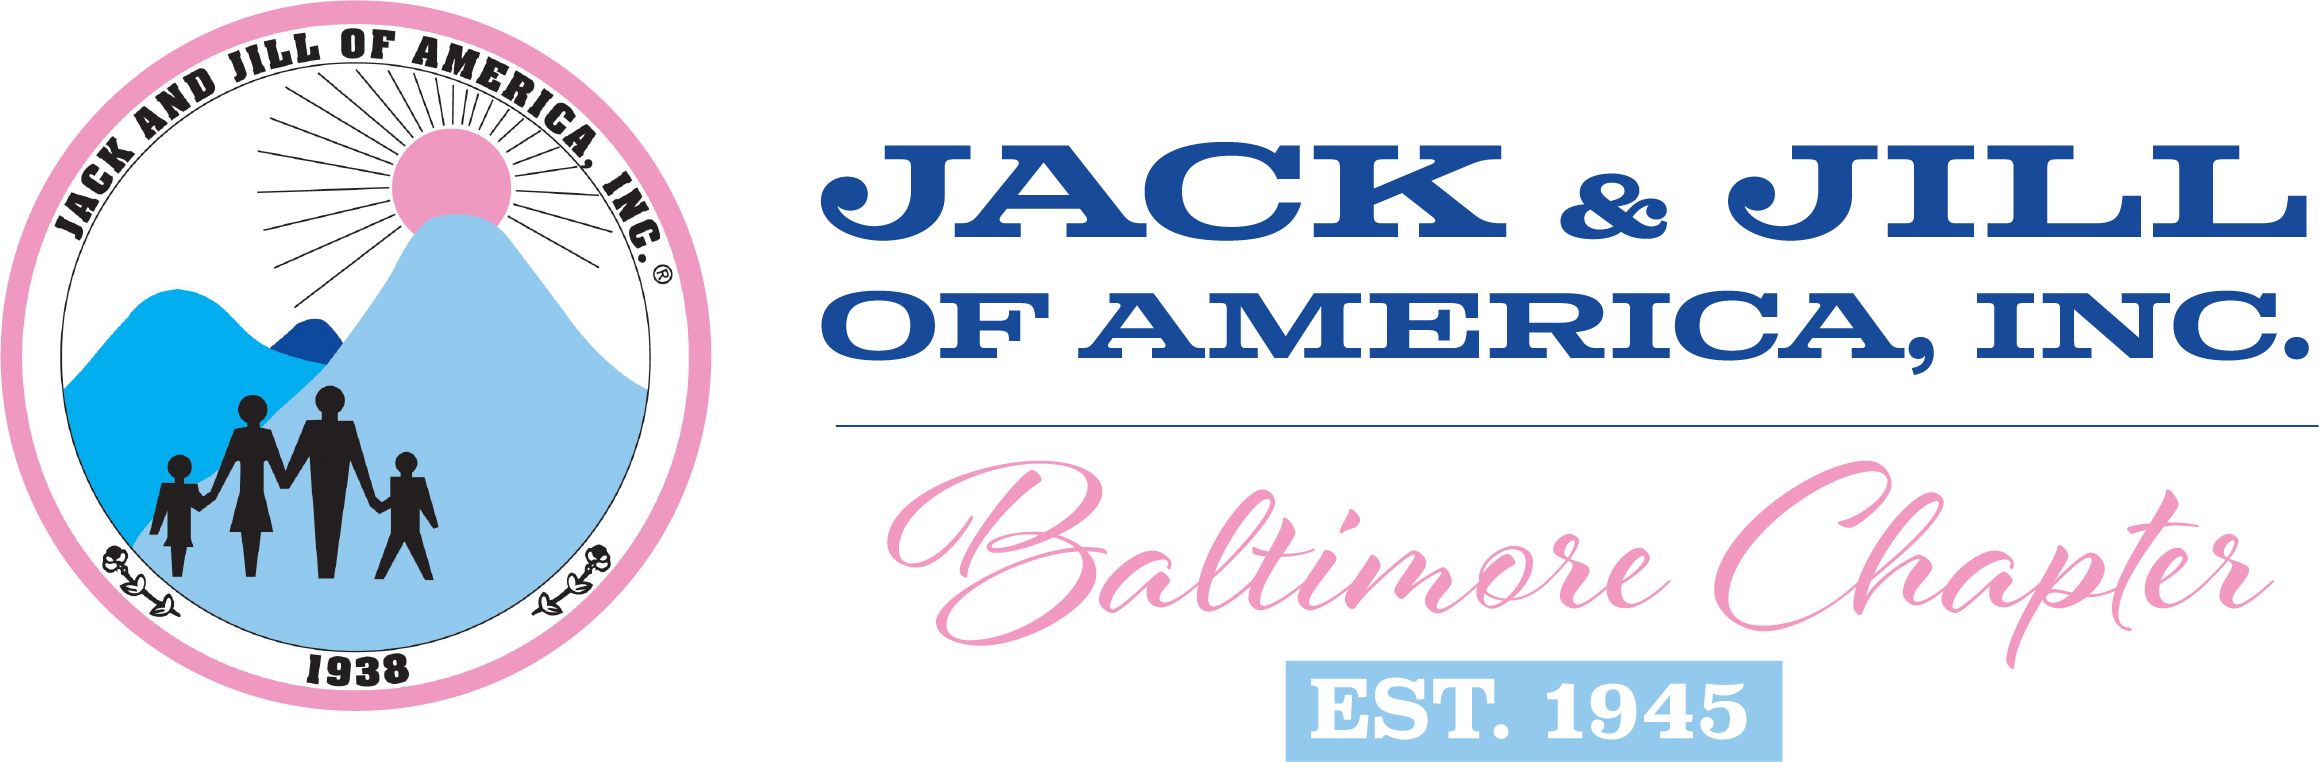 Jack & Jill Baltimore Chapter